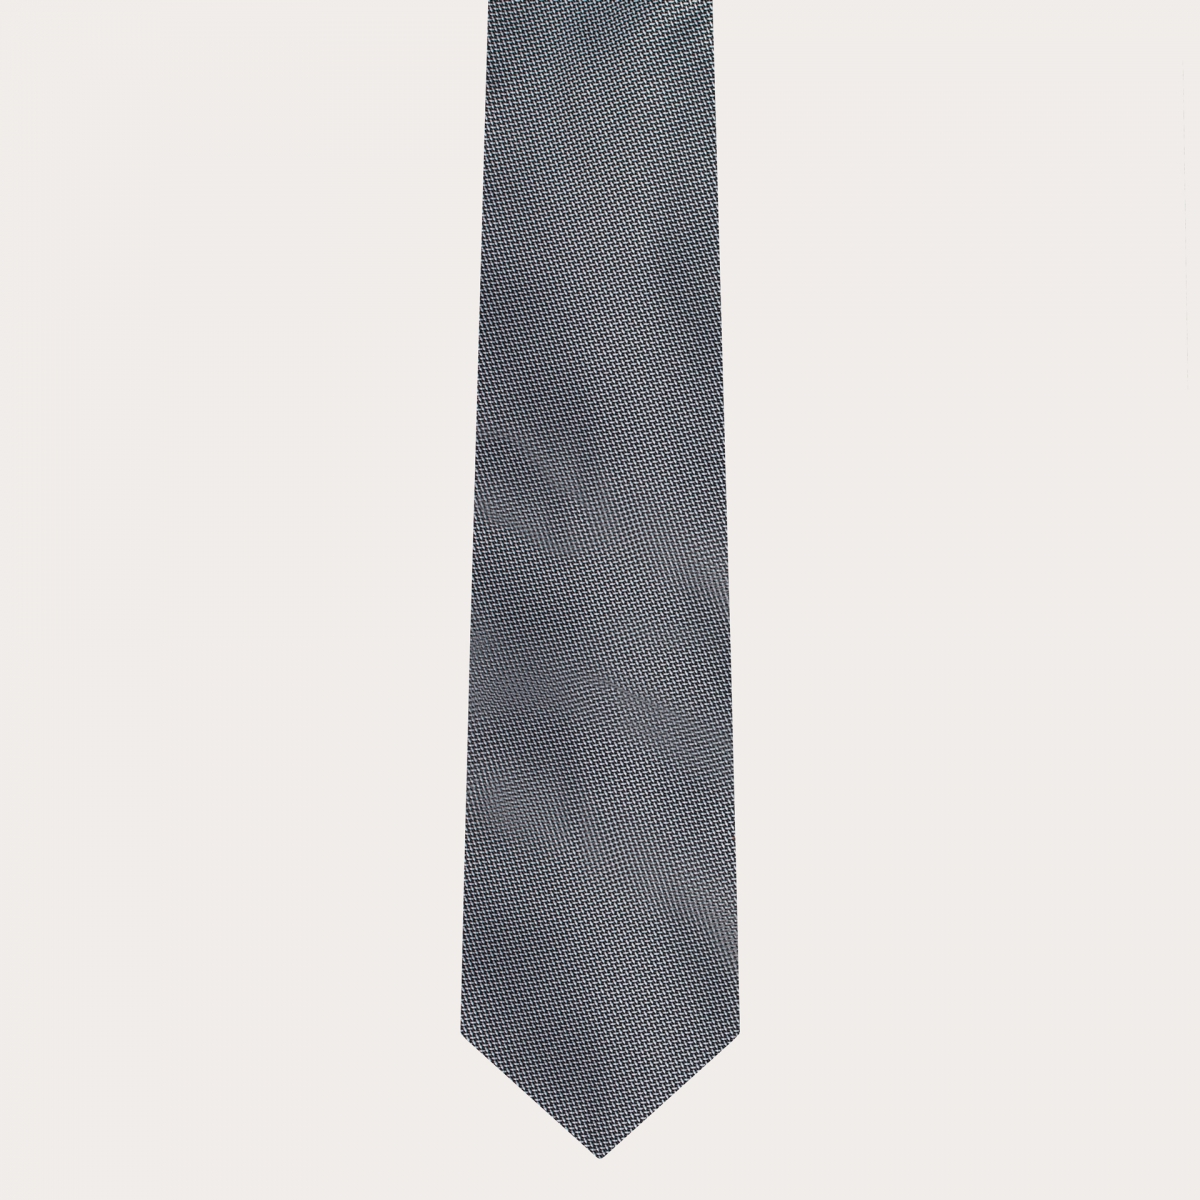 BRUCLE Set coordinato di bretelle e cravatta in elegante seta grigia puntaspillo